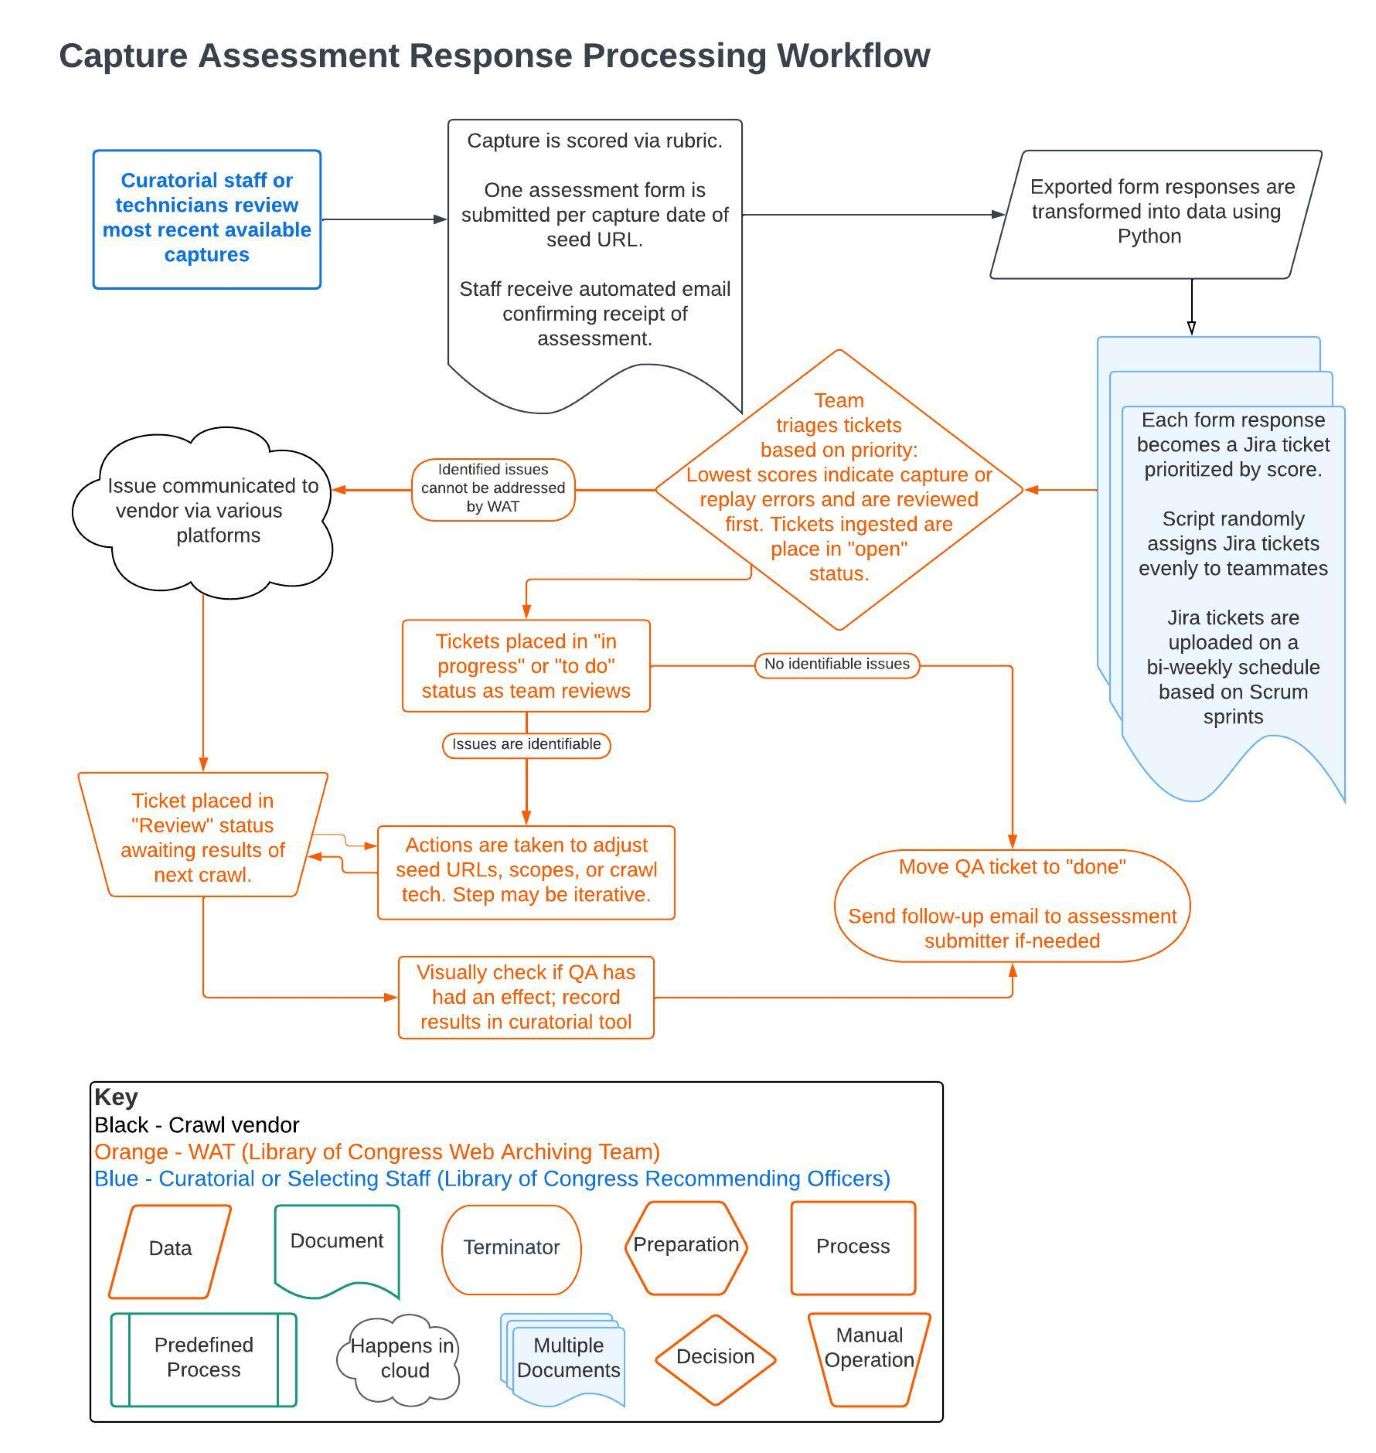 Capture Assessment Response Processes